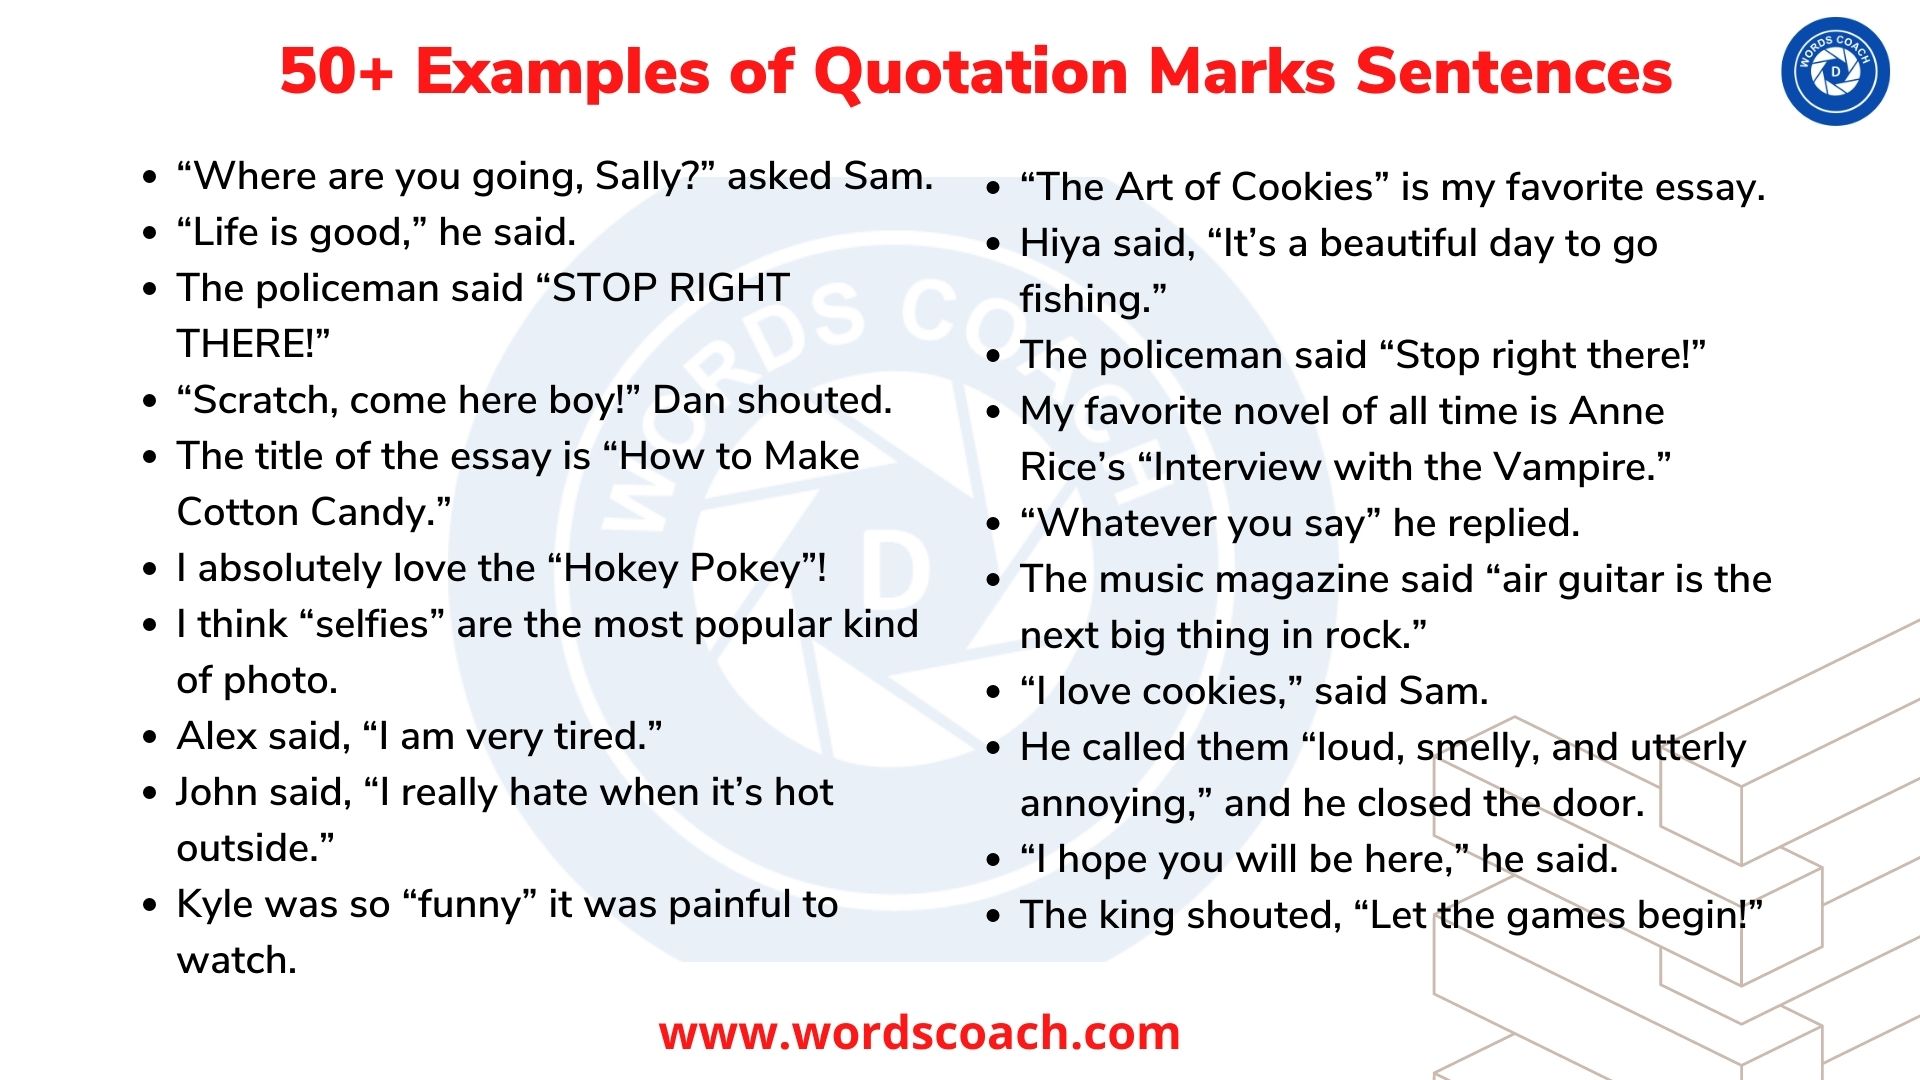 50+ Examples of Quotation Marks Sentences - wordscoach.com